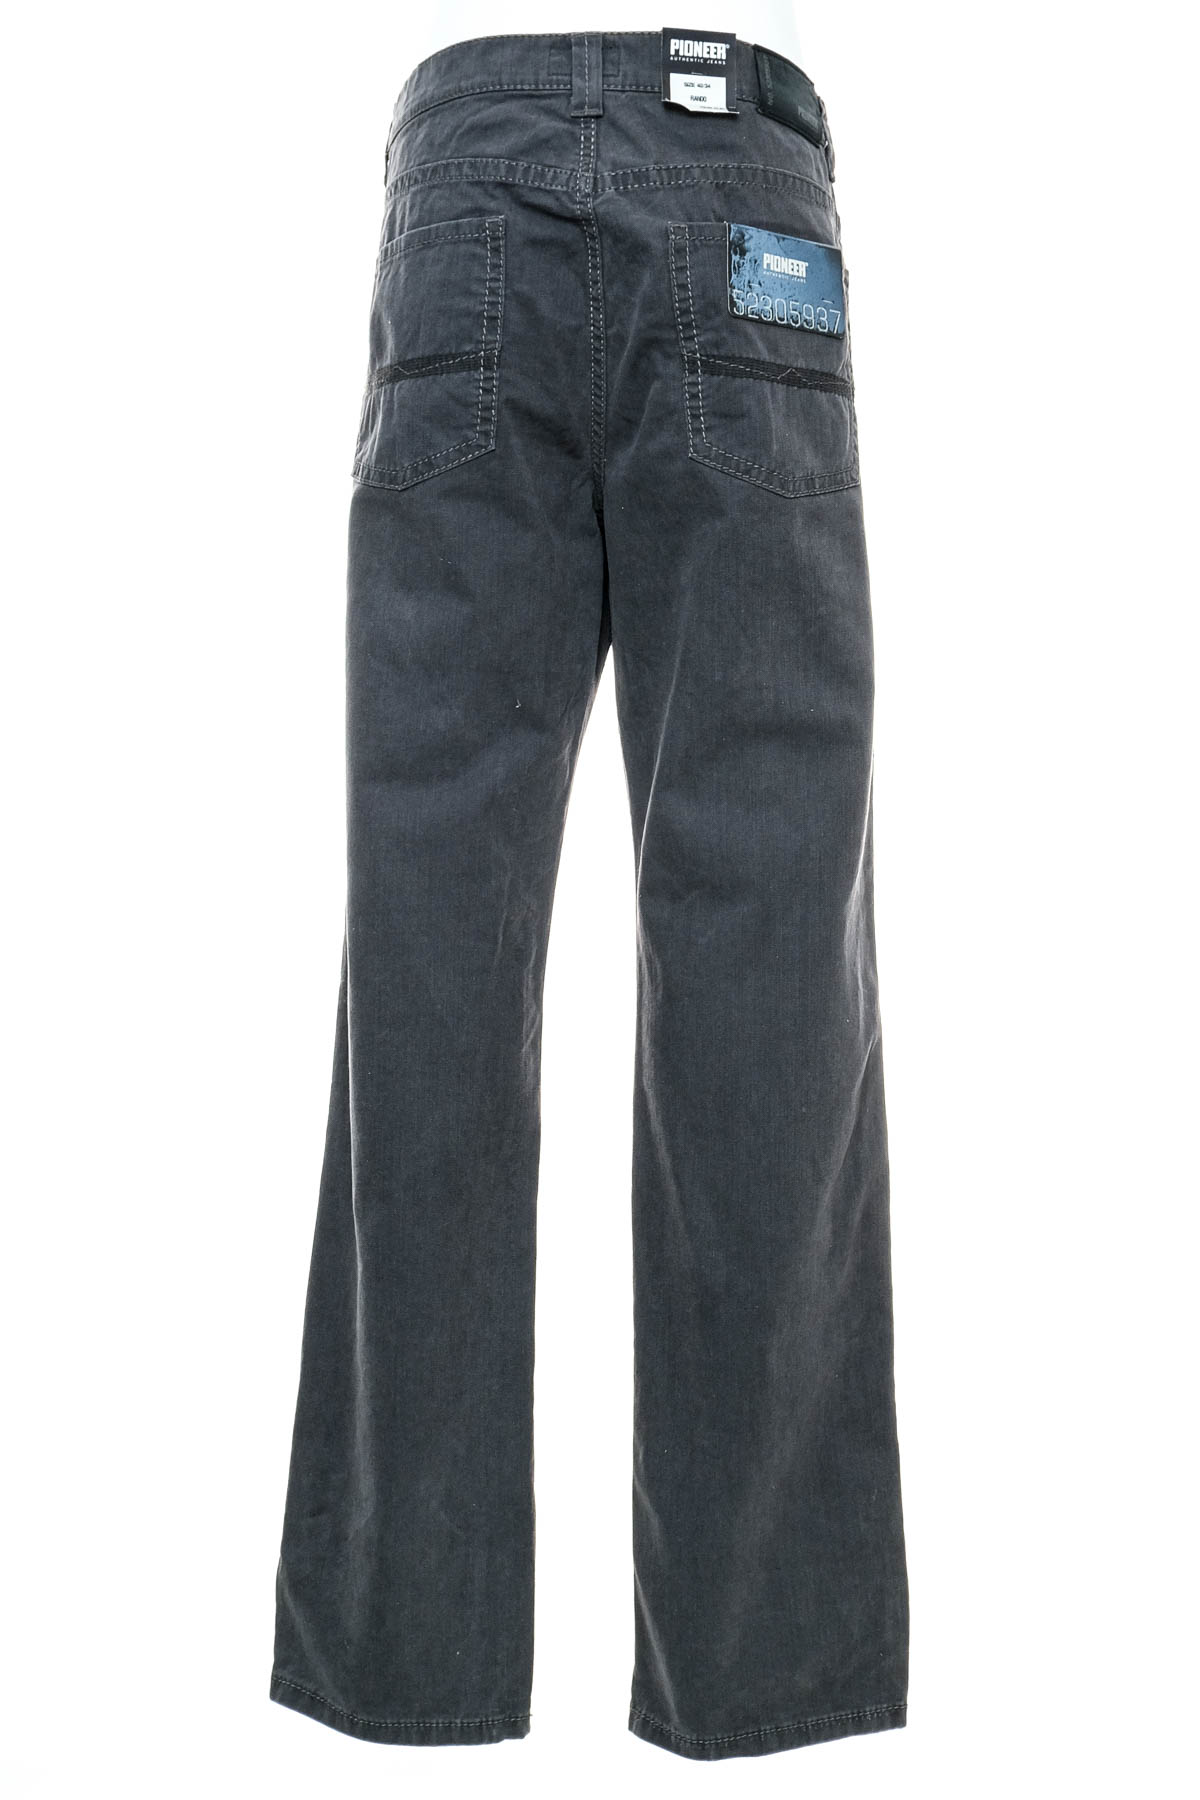 Men's jeans - Pioneer - 1